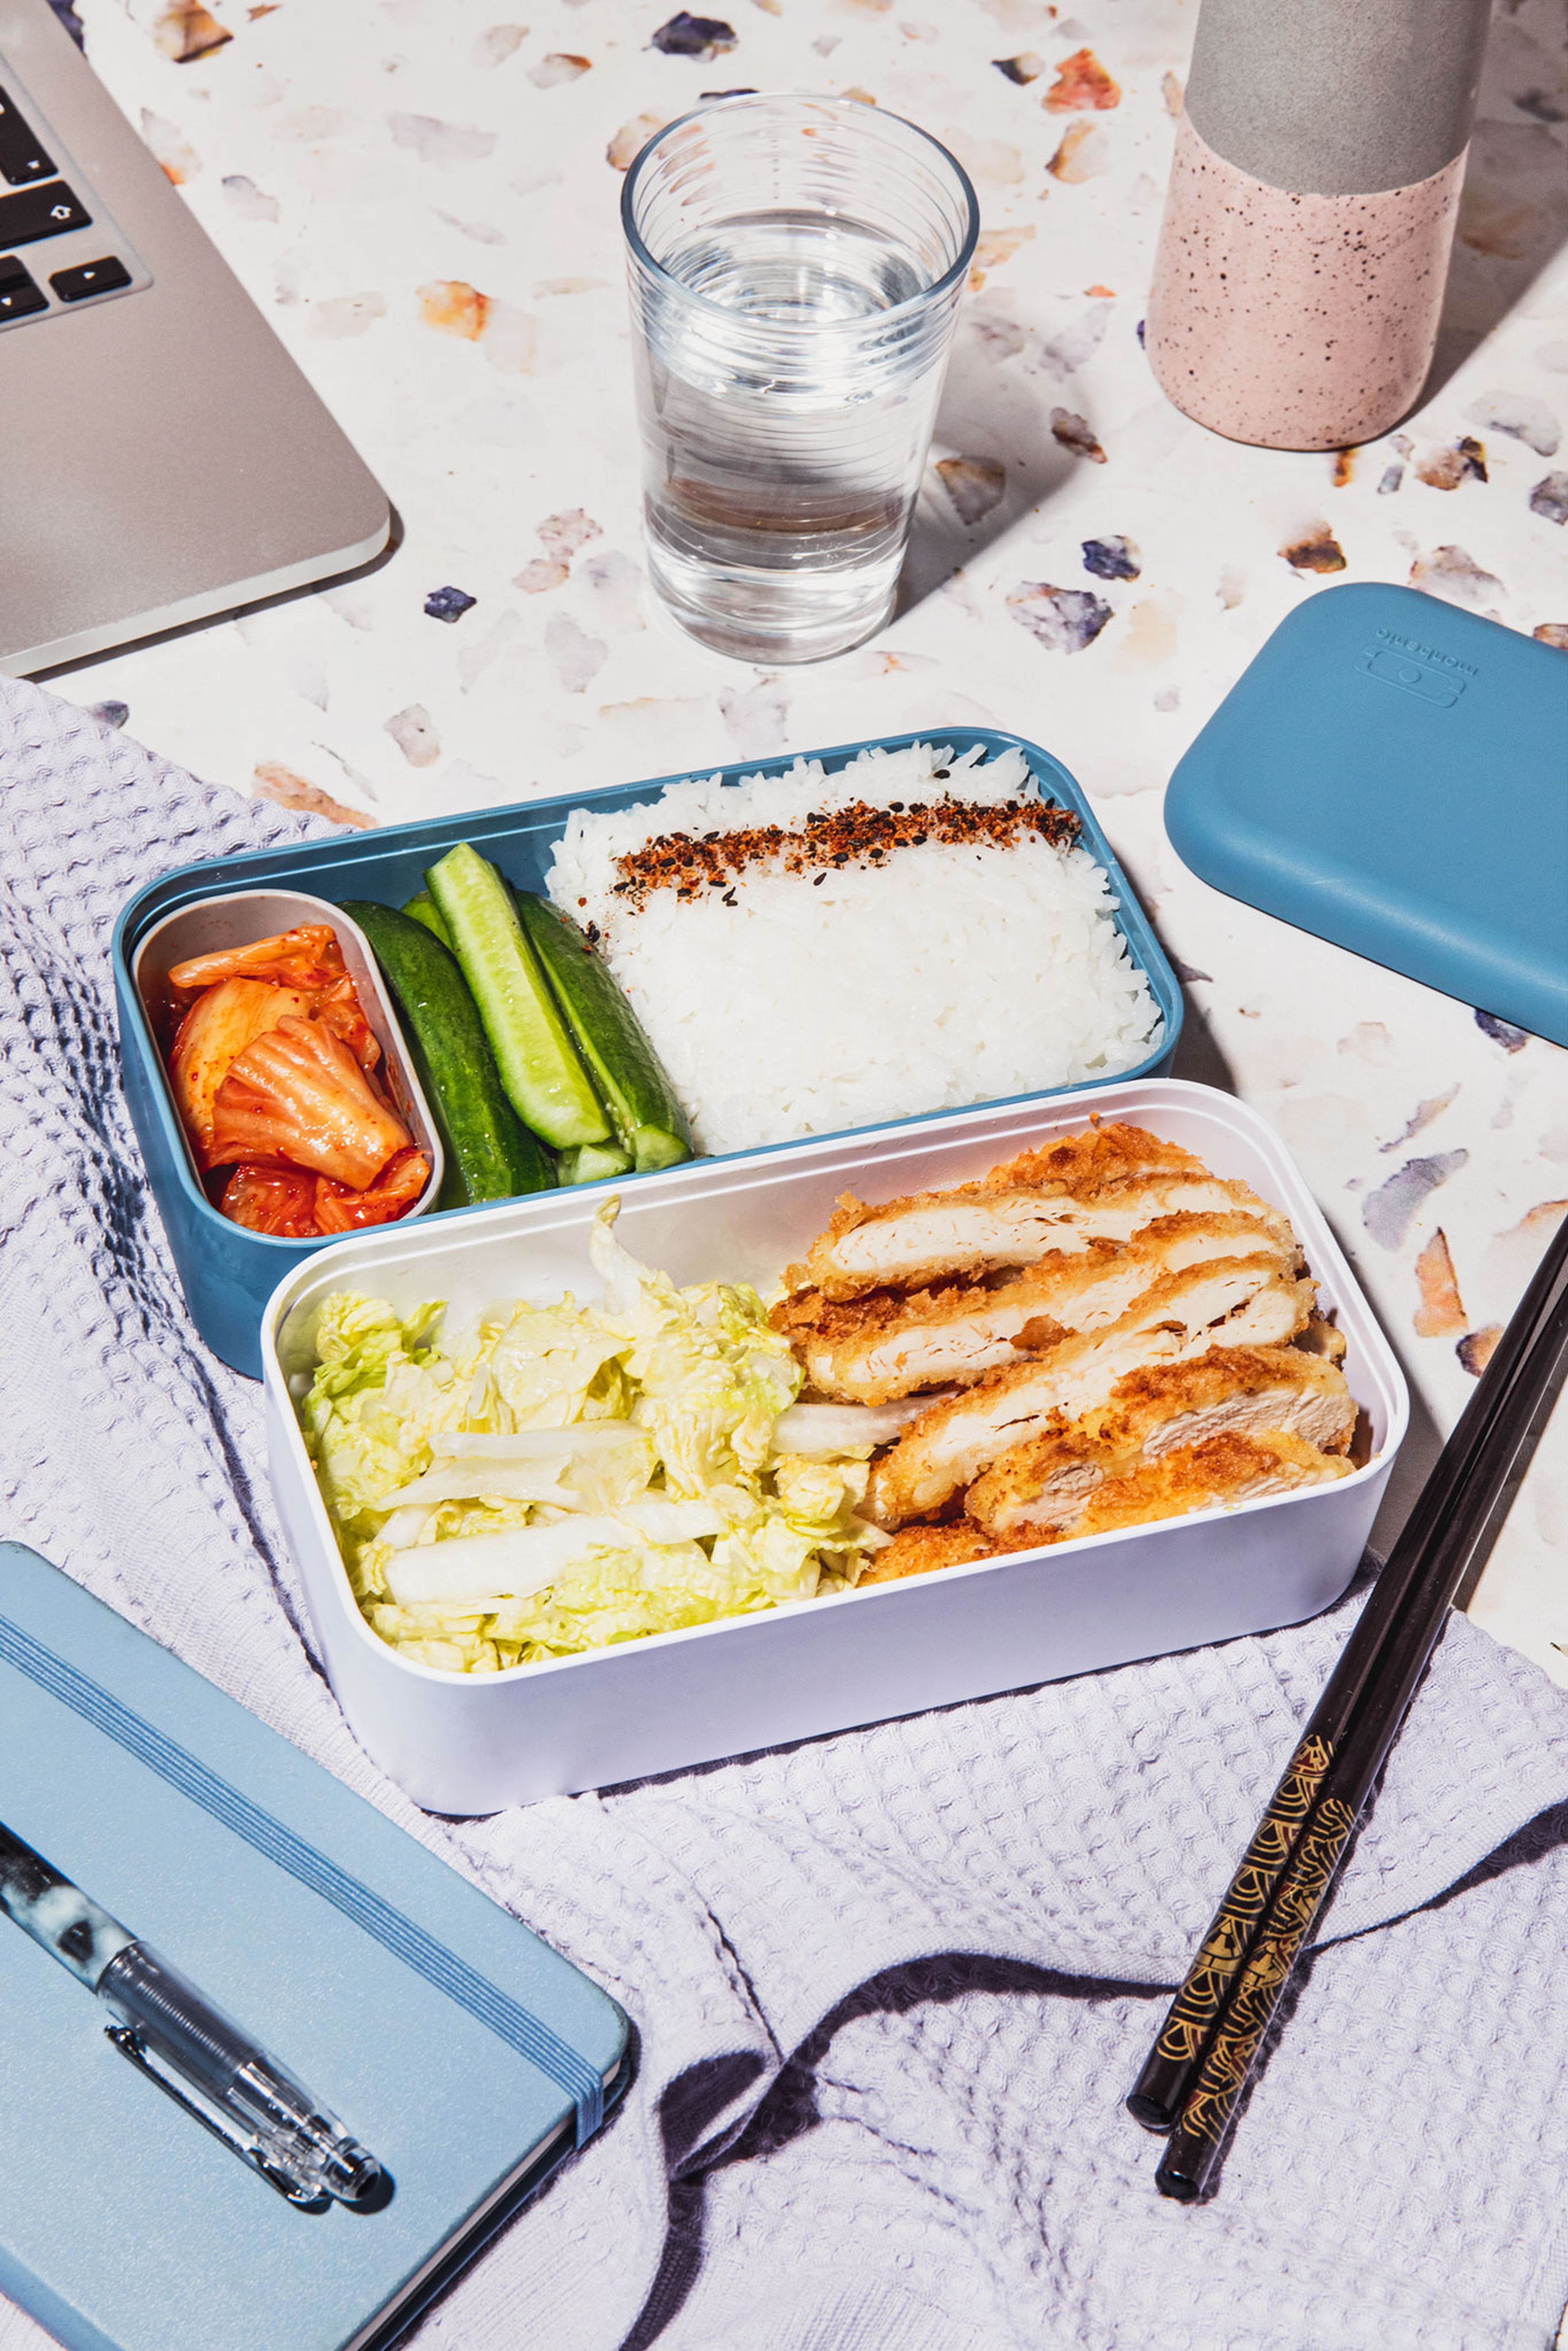 BENTO BOX RECIPE FOR KIDS/ Japanese mom's vegetarian lunch box!/ Japanese  breakfast! 